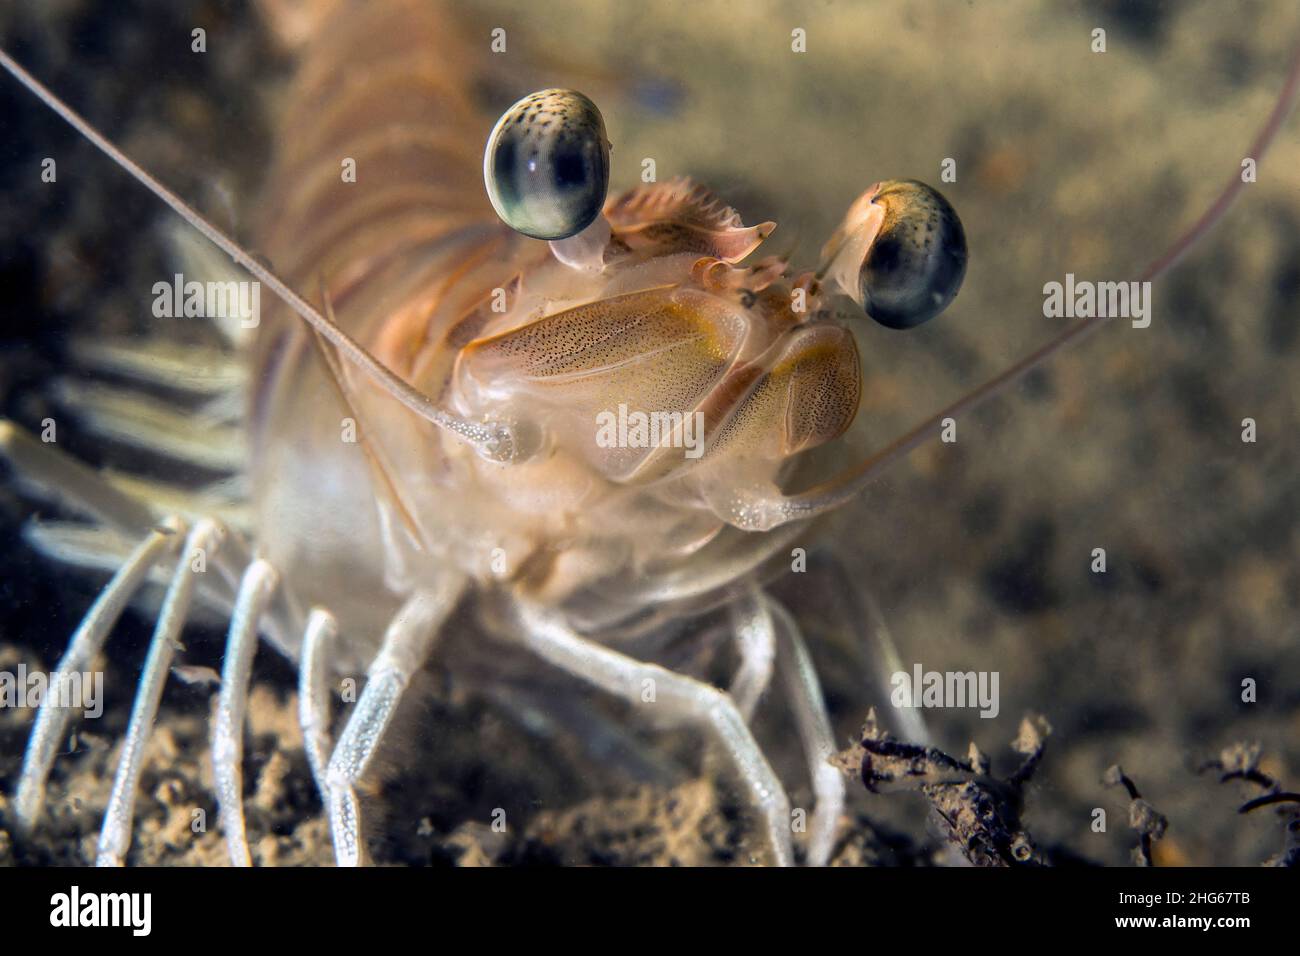 Close up portrait of a shrimp (Penaeus kerathurus) in Italy Stock Photo